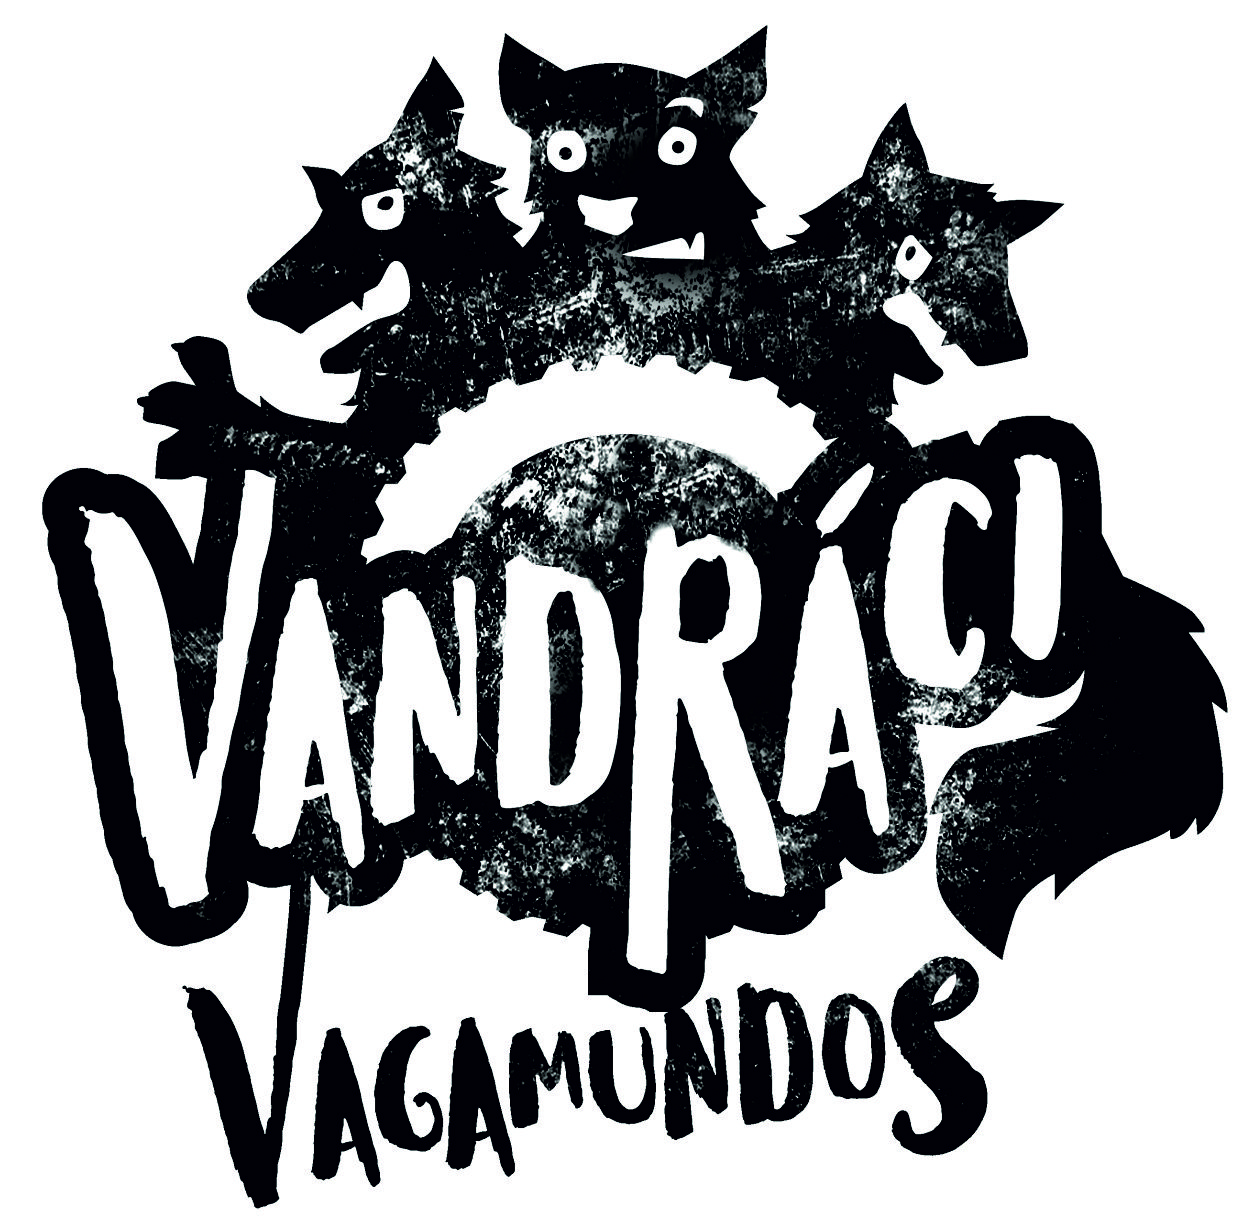 VANDRÁCI - VAGAMUNDOS